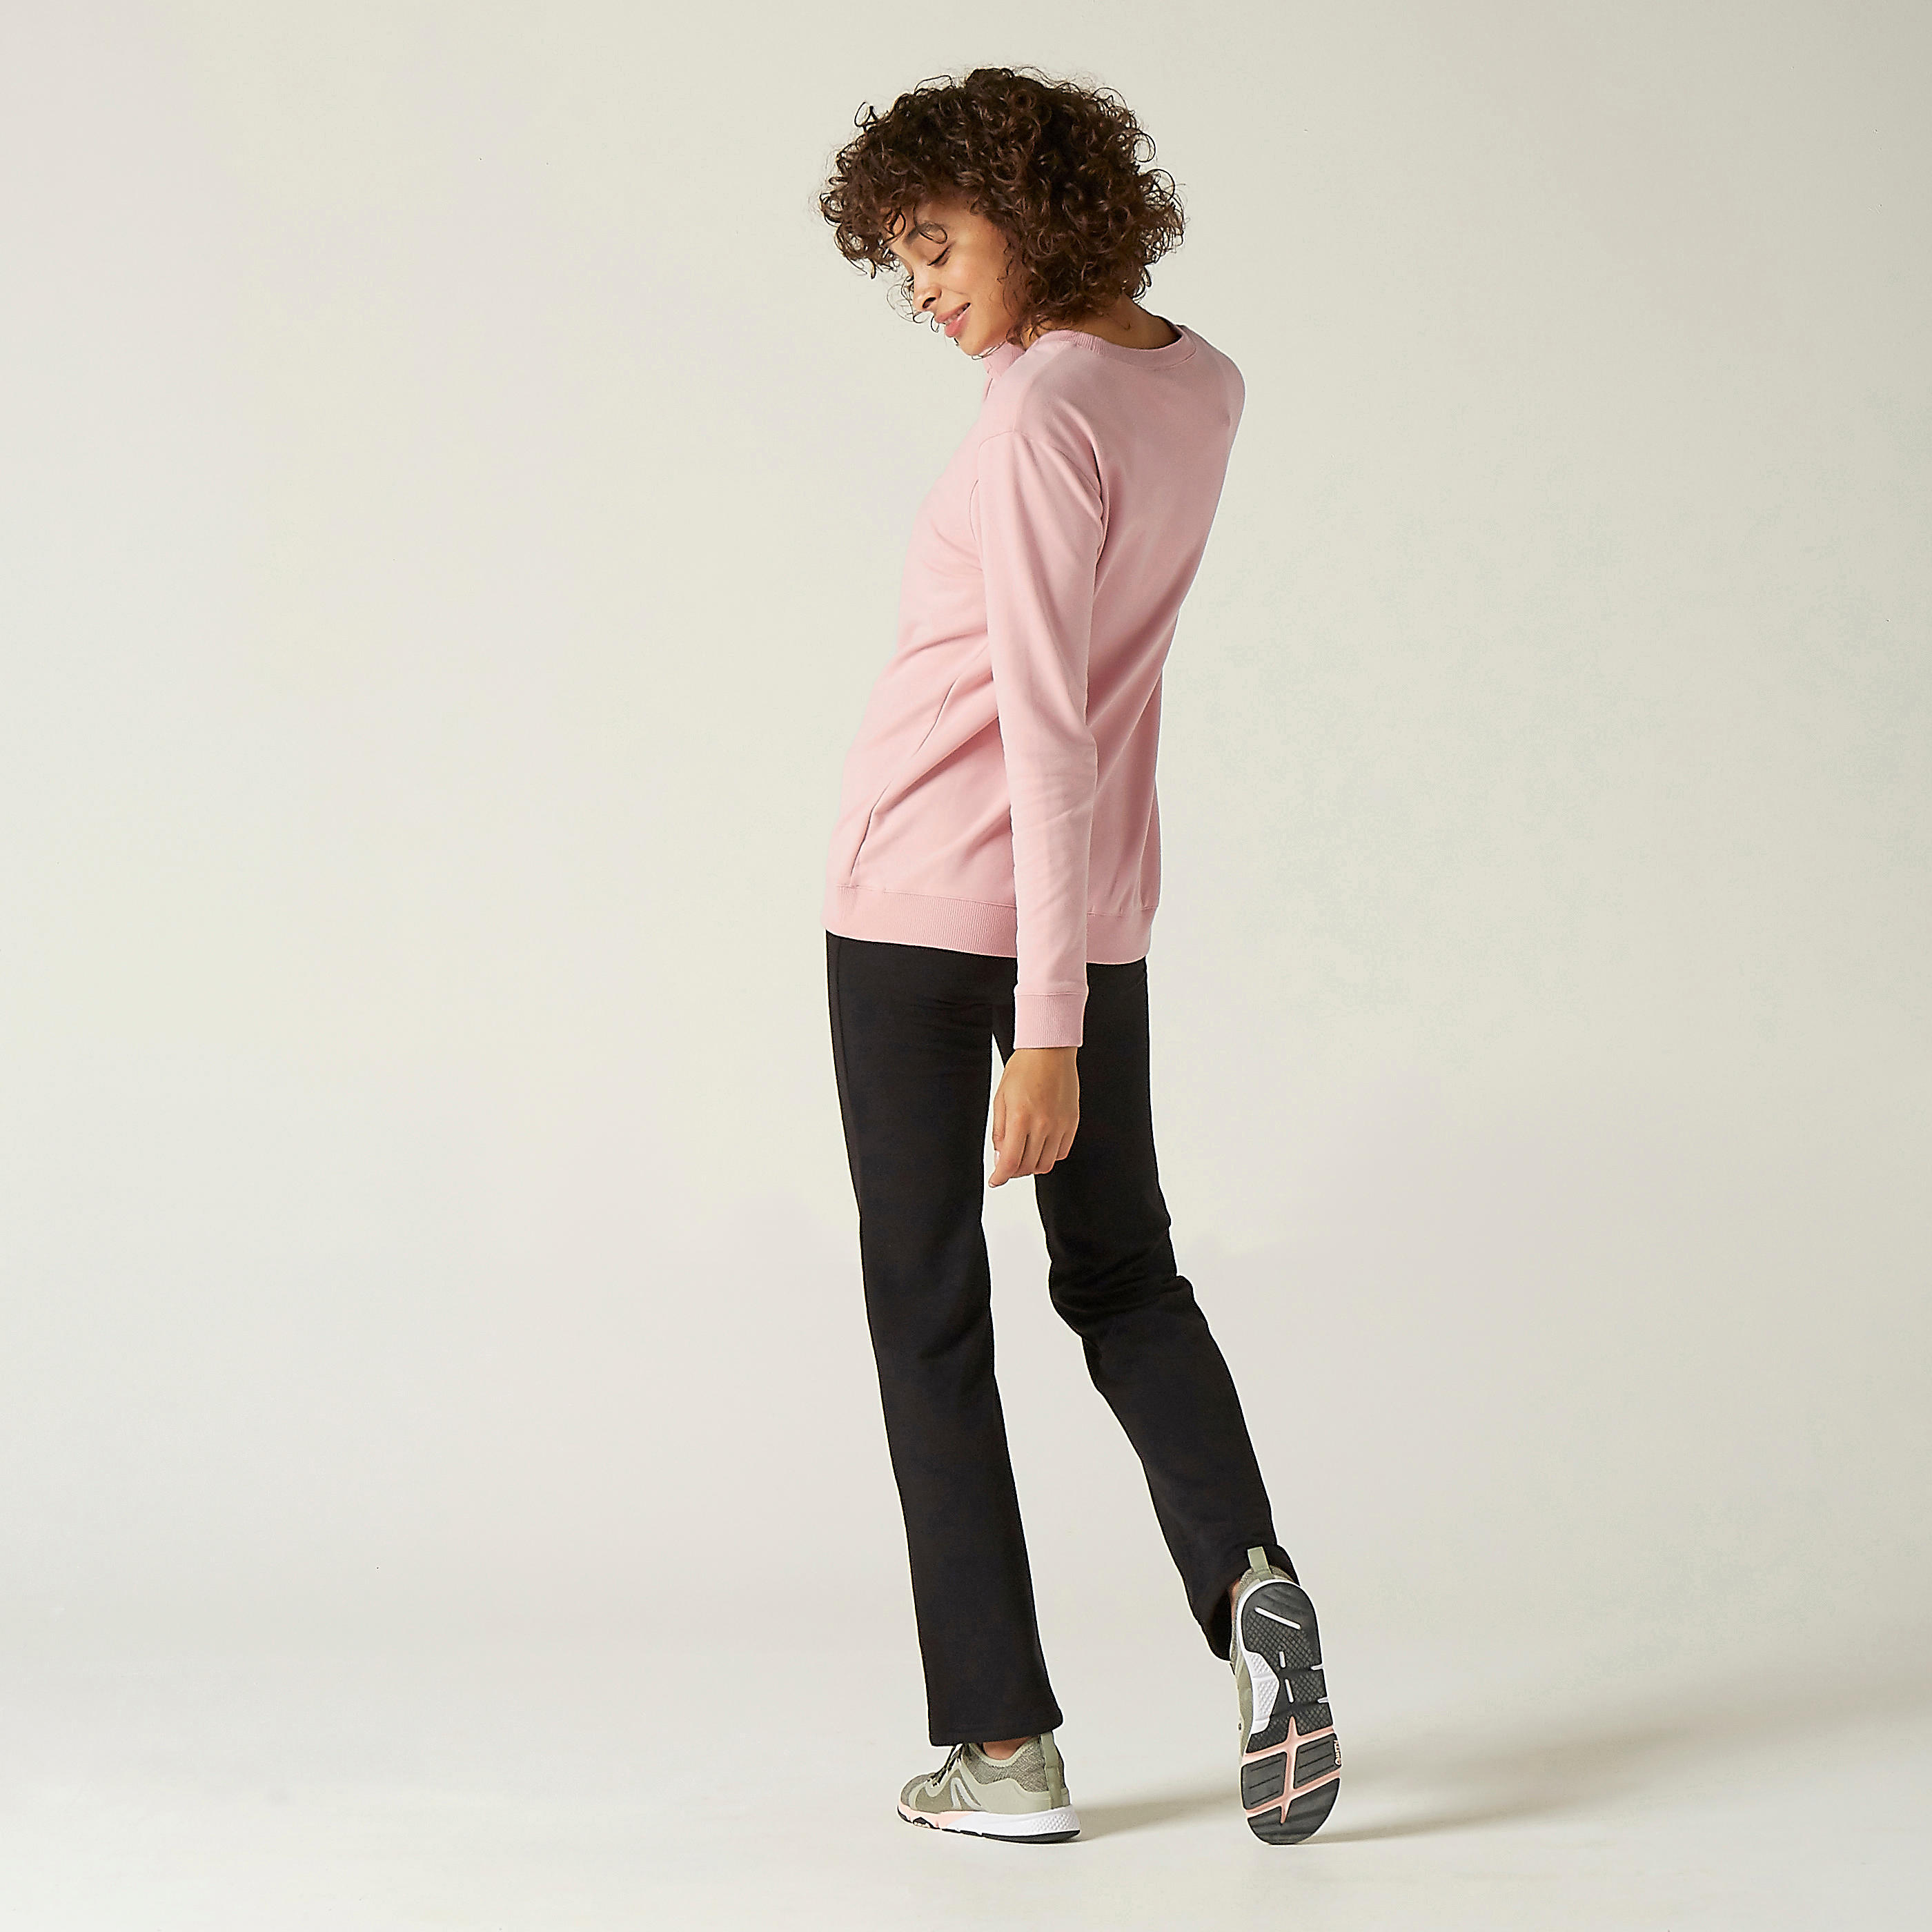 Refurbished Womens Fitness Sweatshirt 100-Pink - A Grade 4/6